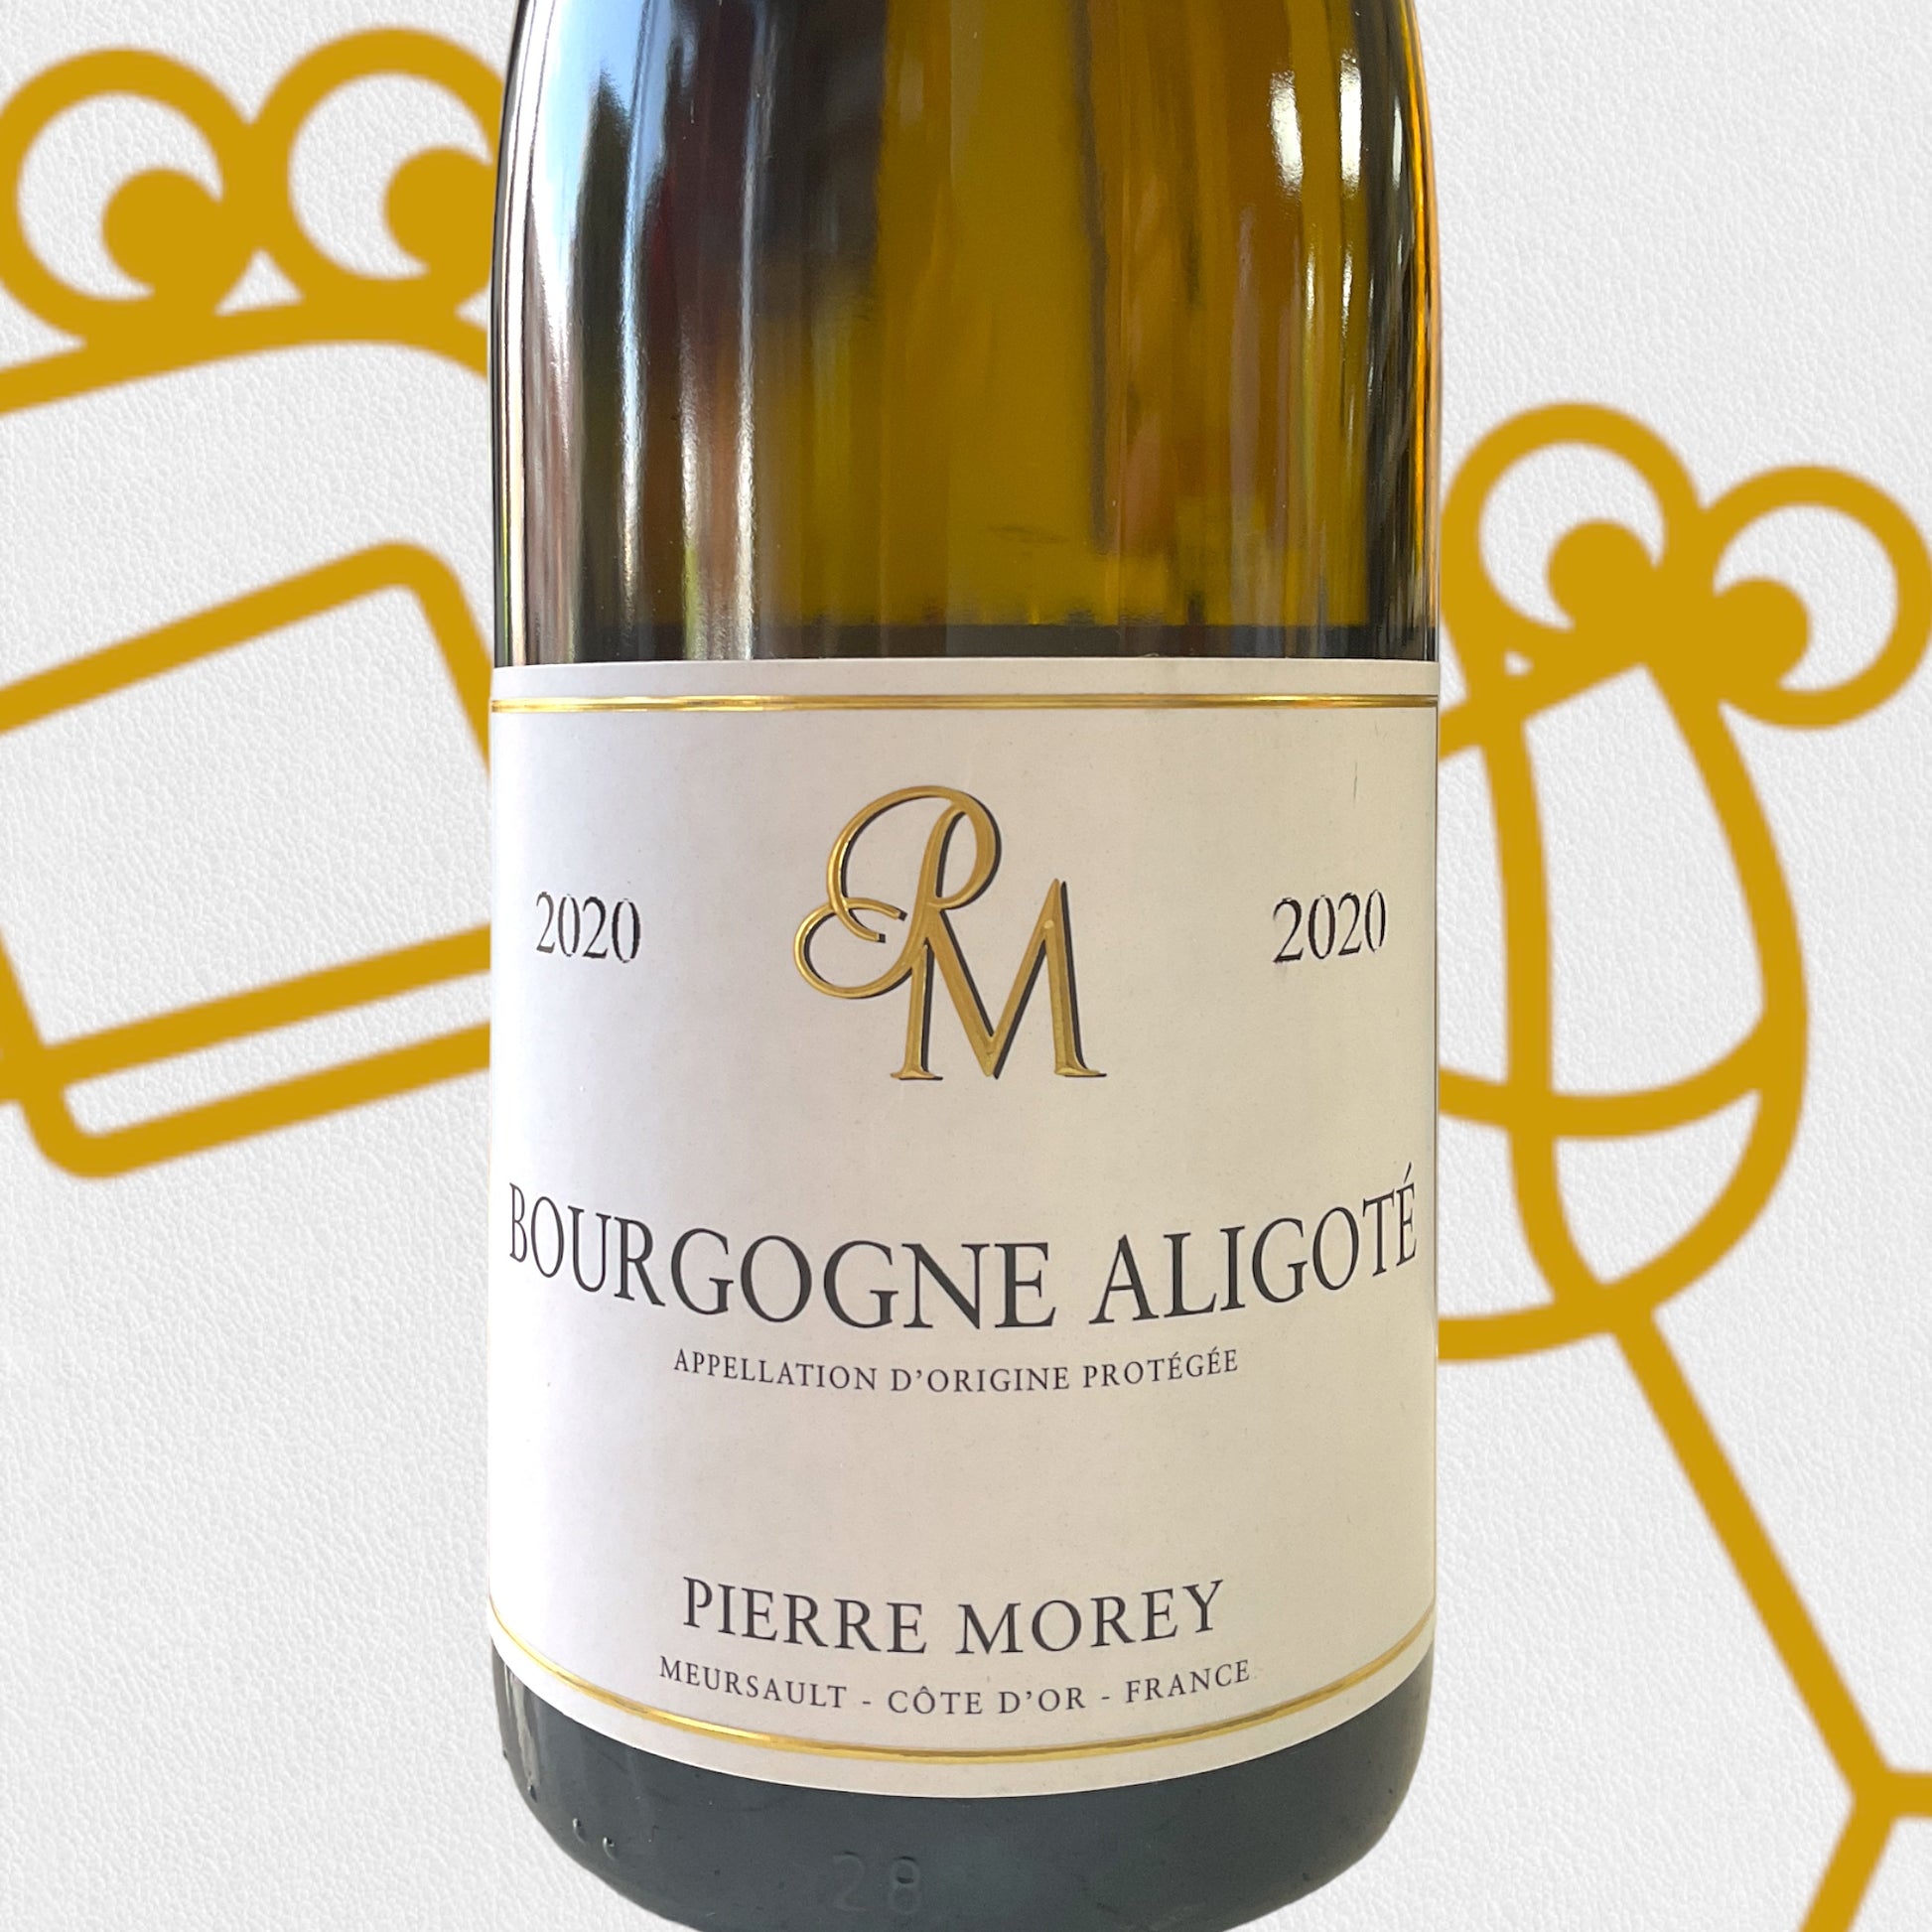 Pierre Morey Bourgogne Aligote 2020 Burgundy, France - Williston Park Wines & Spirits